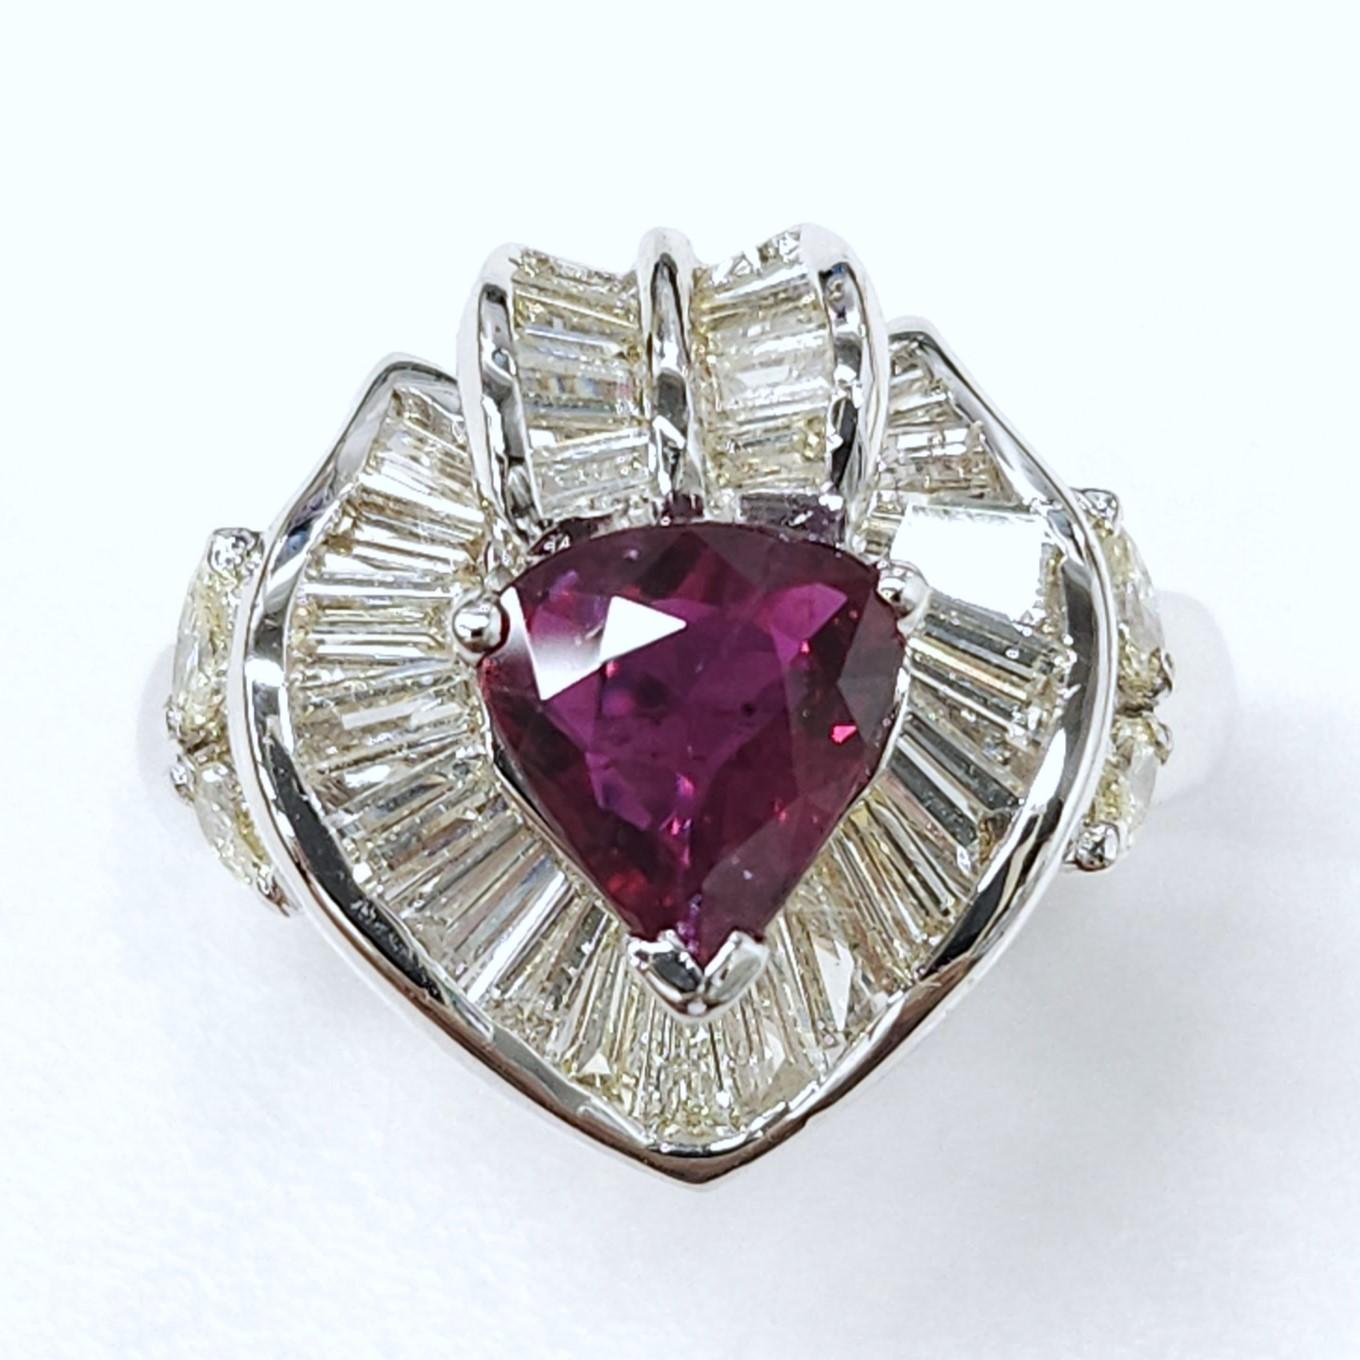 IGI Certified 1.35Carat Ruby & Diamond Ring in 18K White Gold For Sale 5